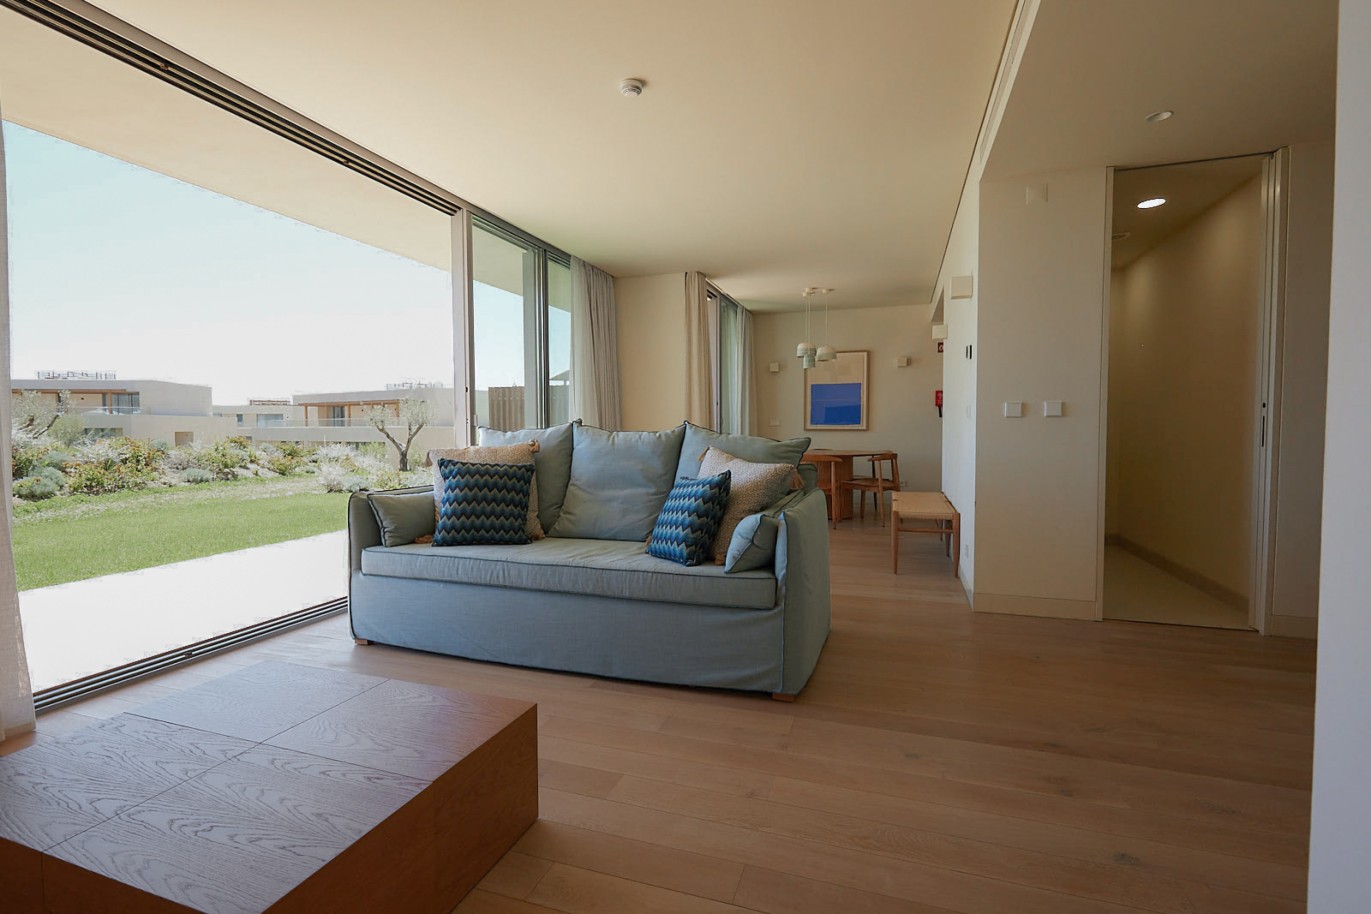 1 bedroom apartment in resort, for sale in Porches, Algarve_228983